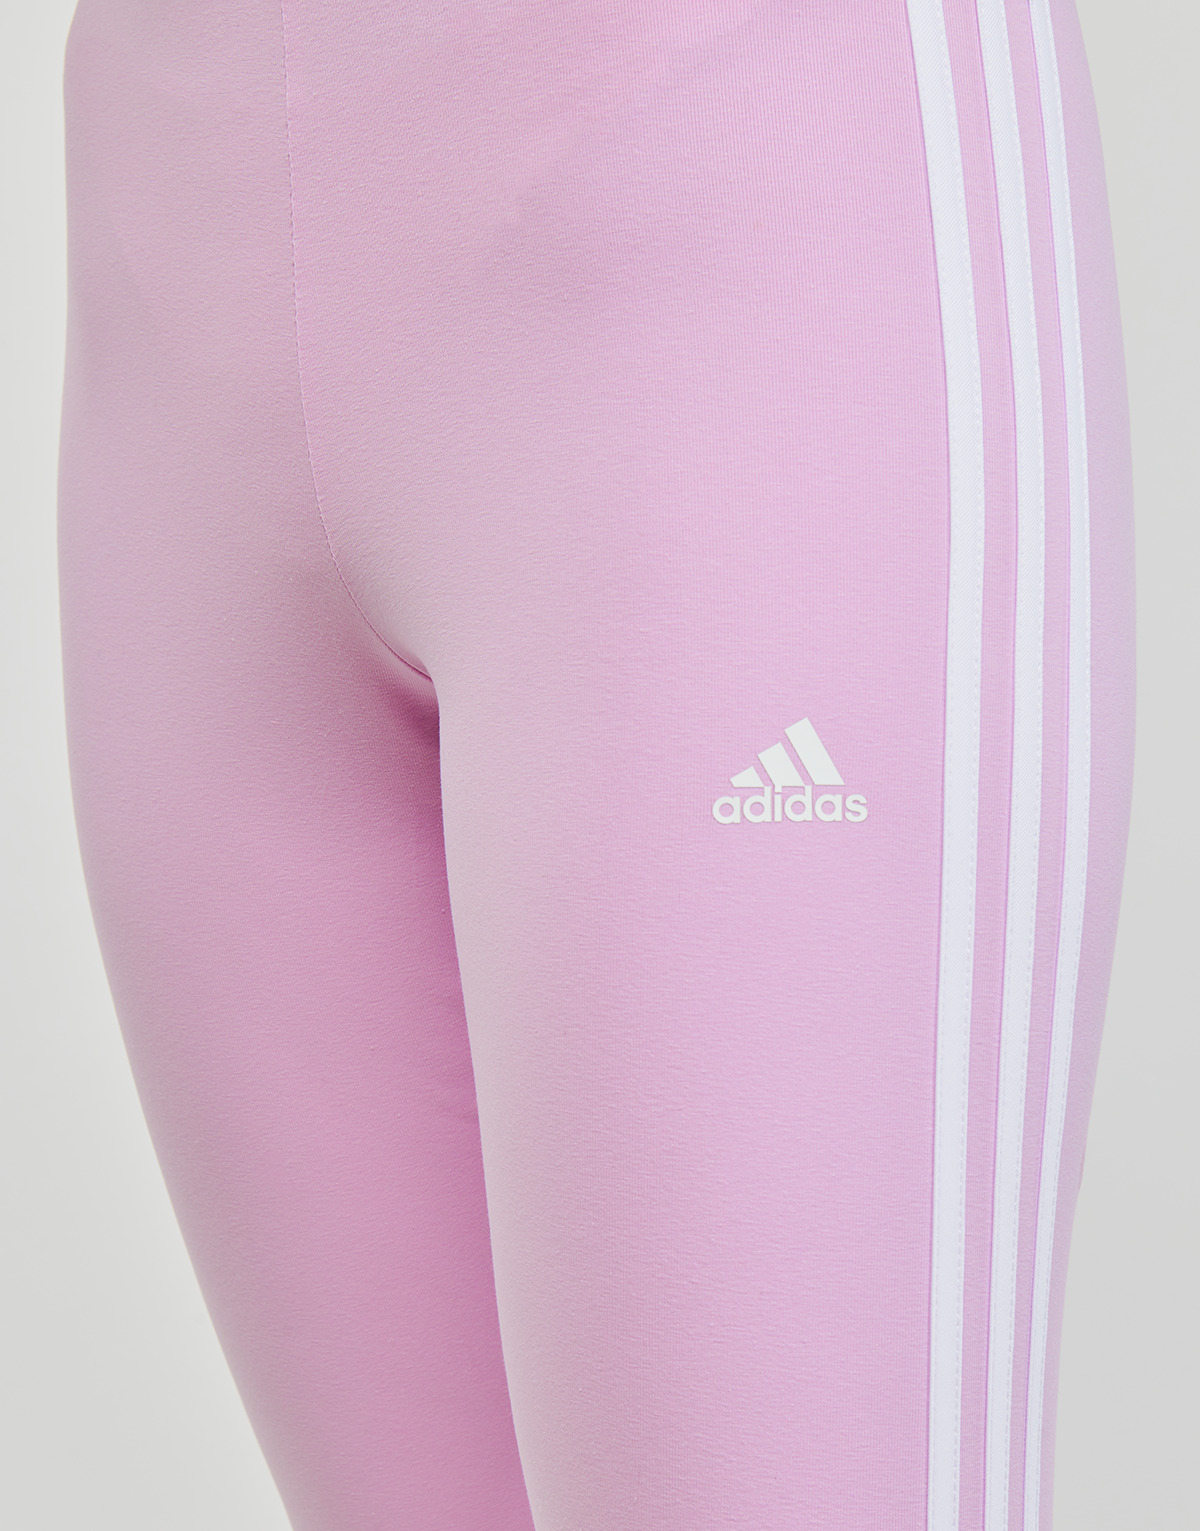 Adidas Sportswear Lilas / Blanc 3S HLG bZDRSJlv